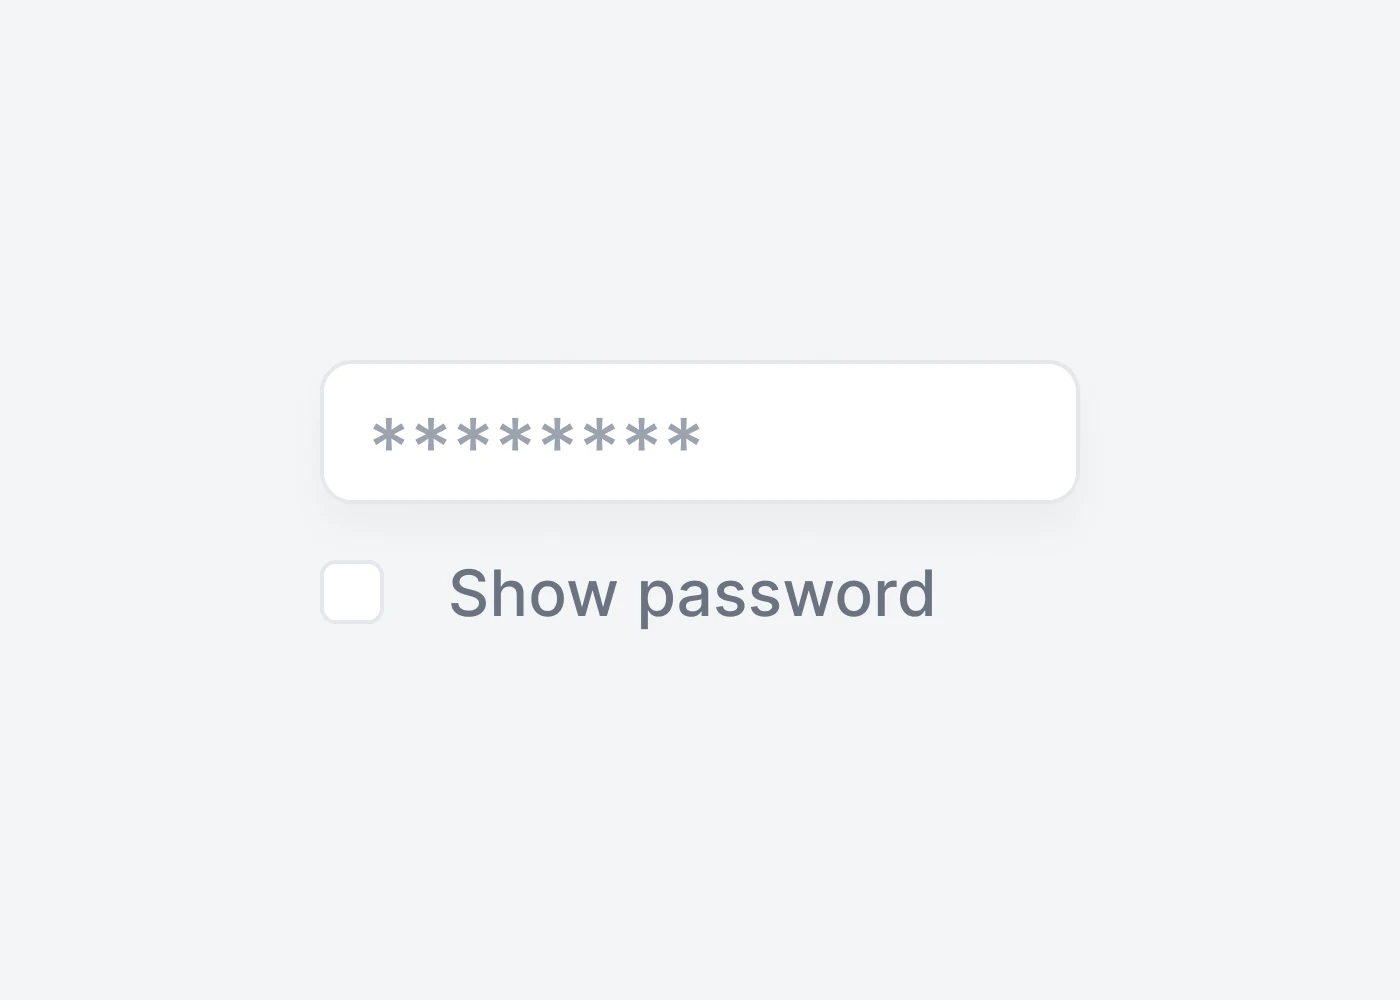 Toggle Password